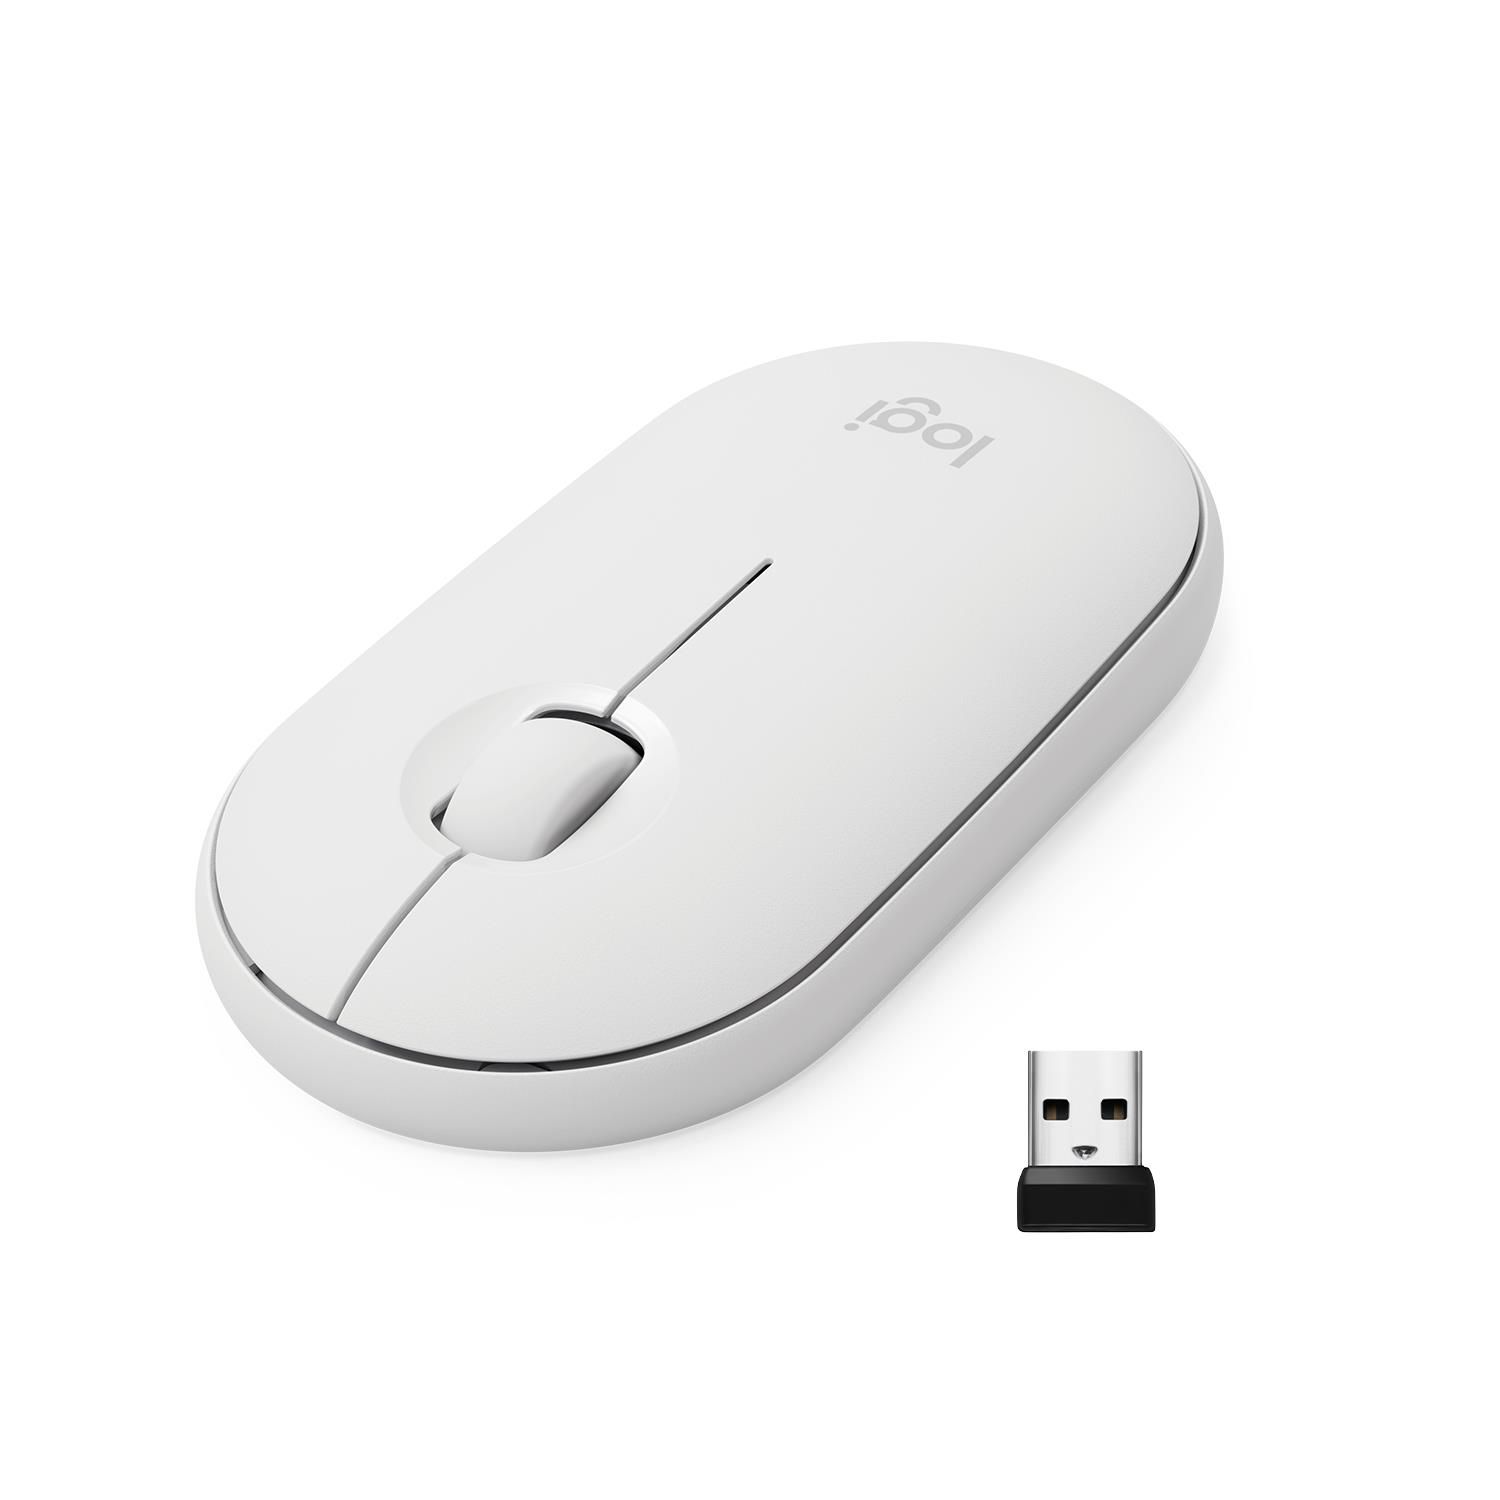 Logitech Pebble Mouse Wireless